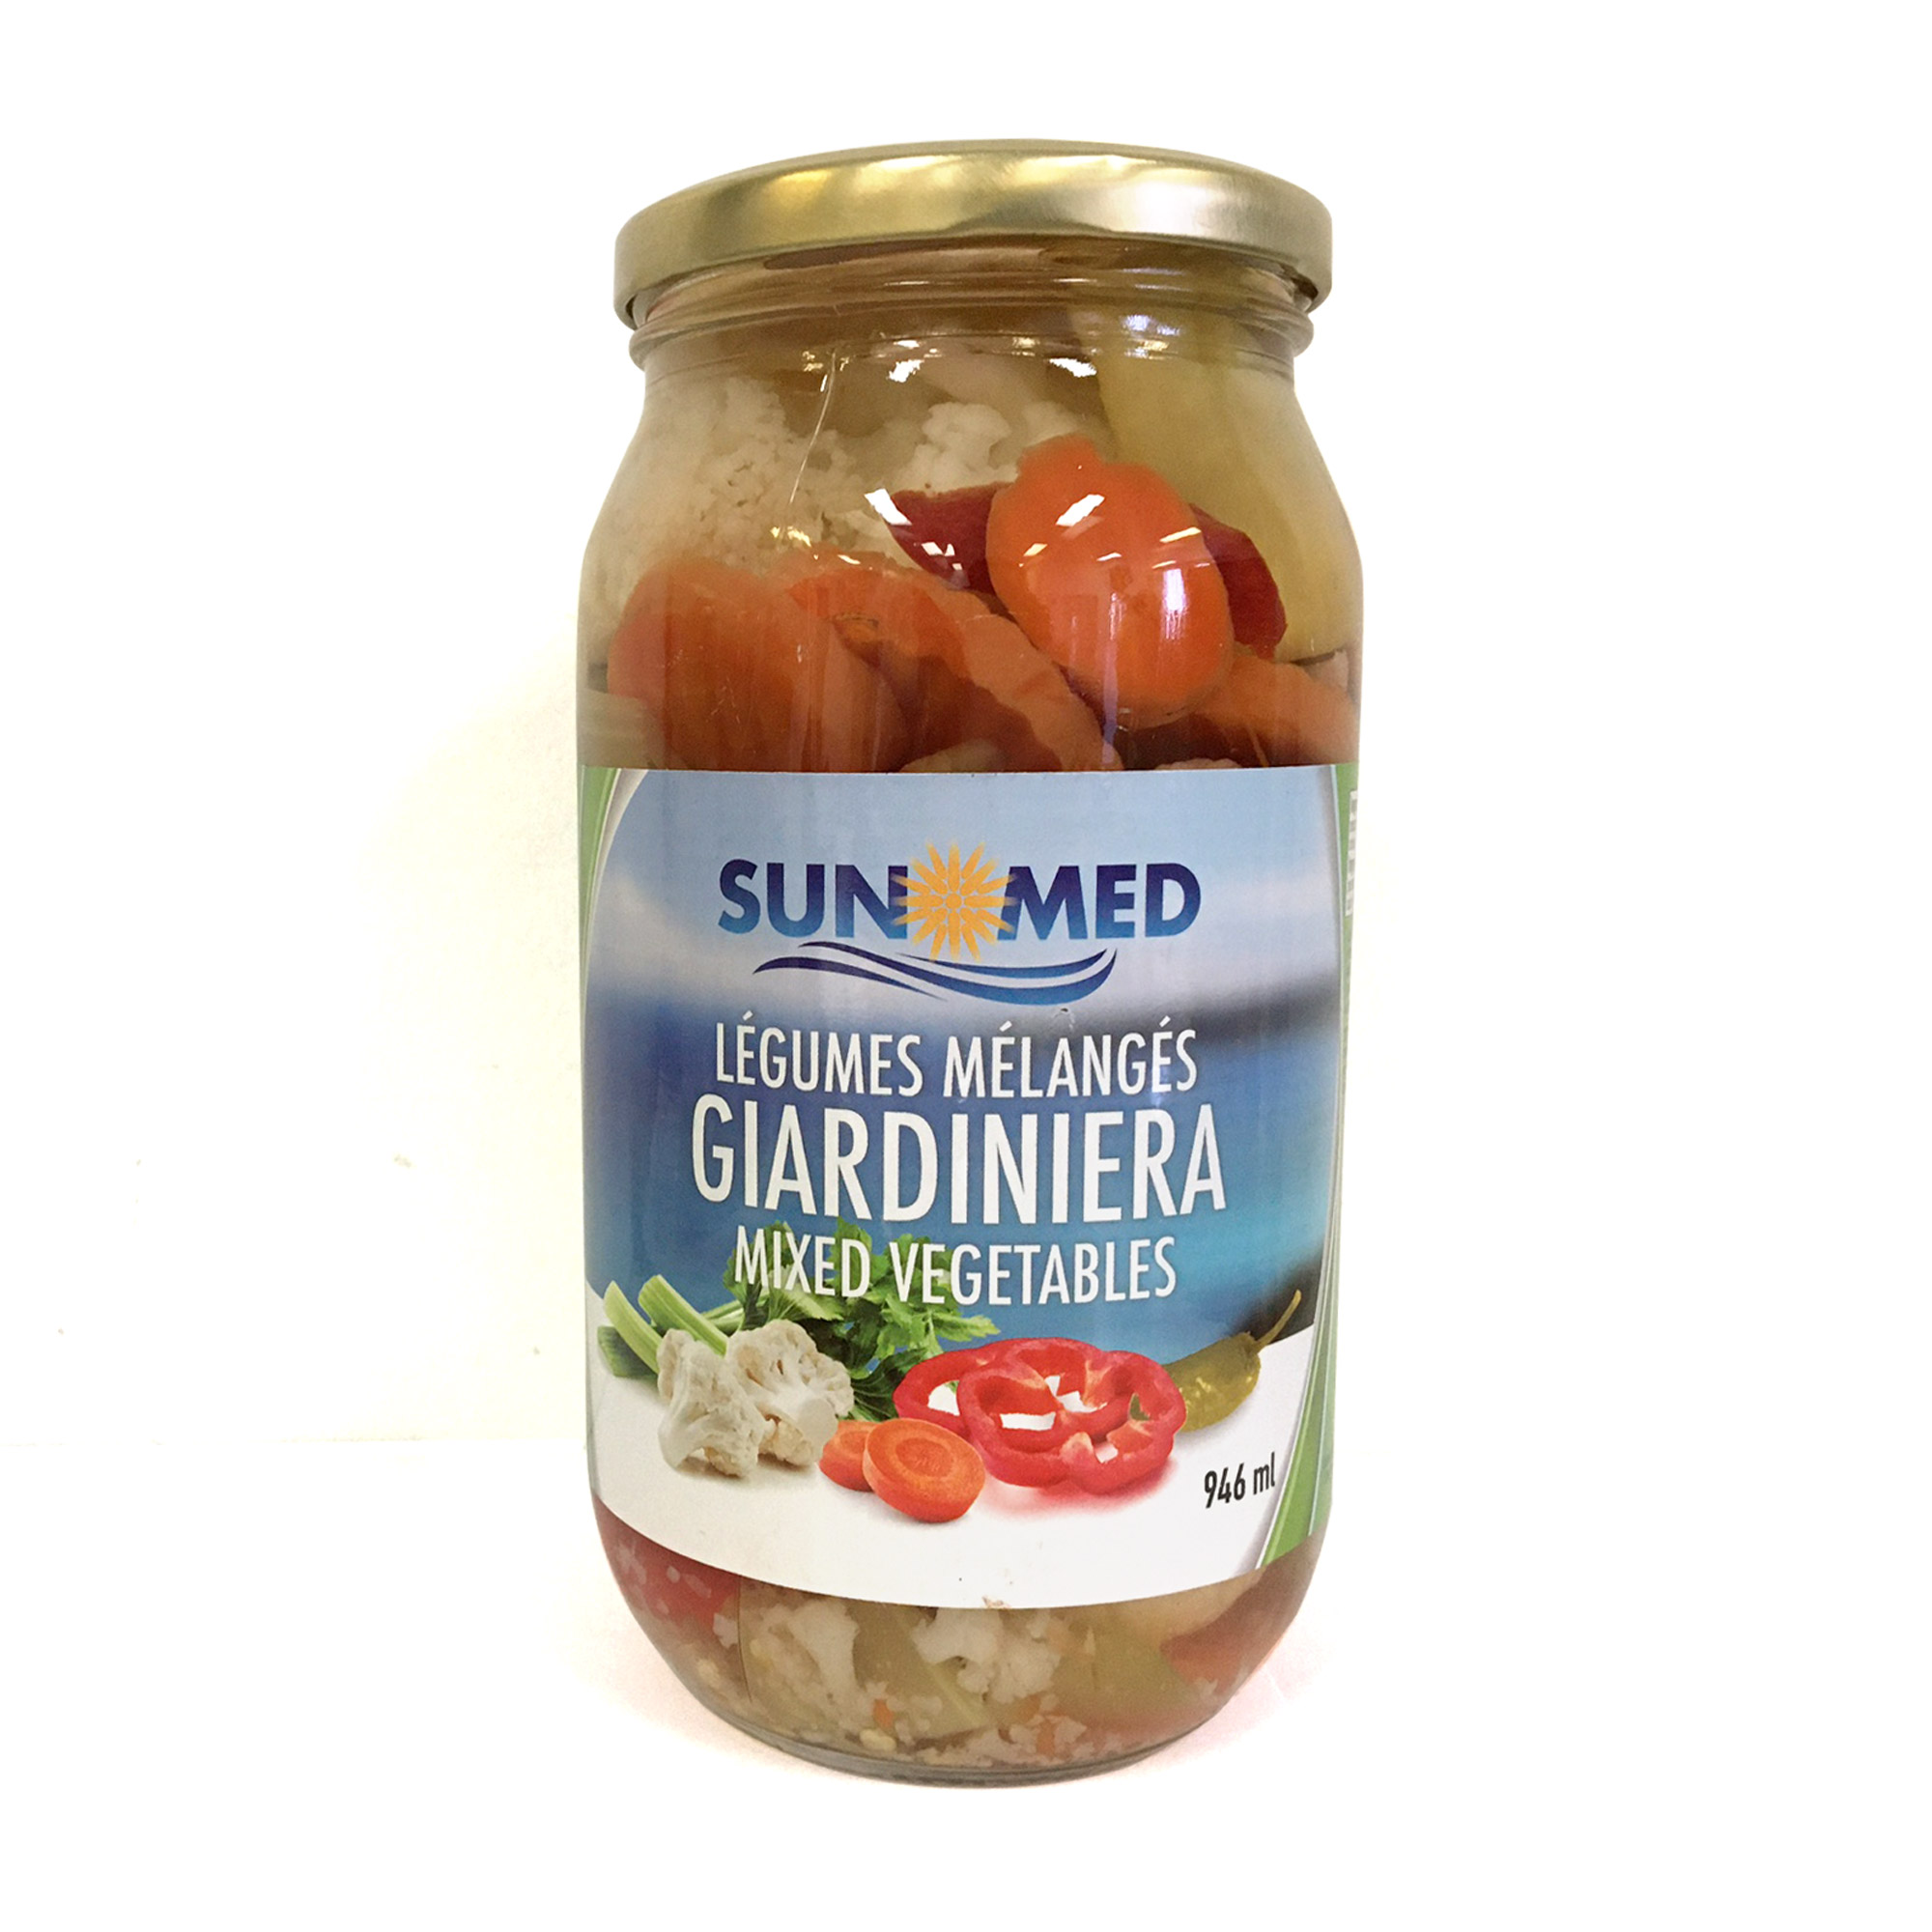 Giardiniera mix vegetables in jars – 946ml